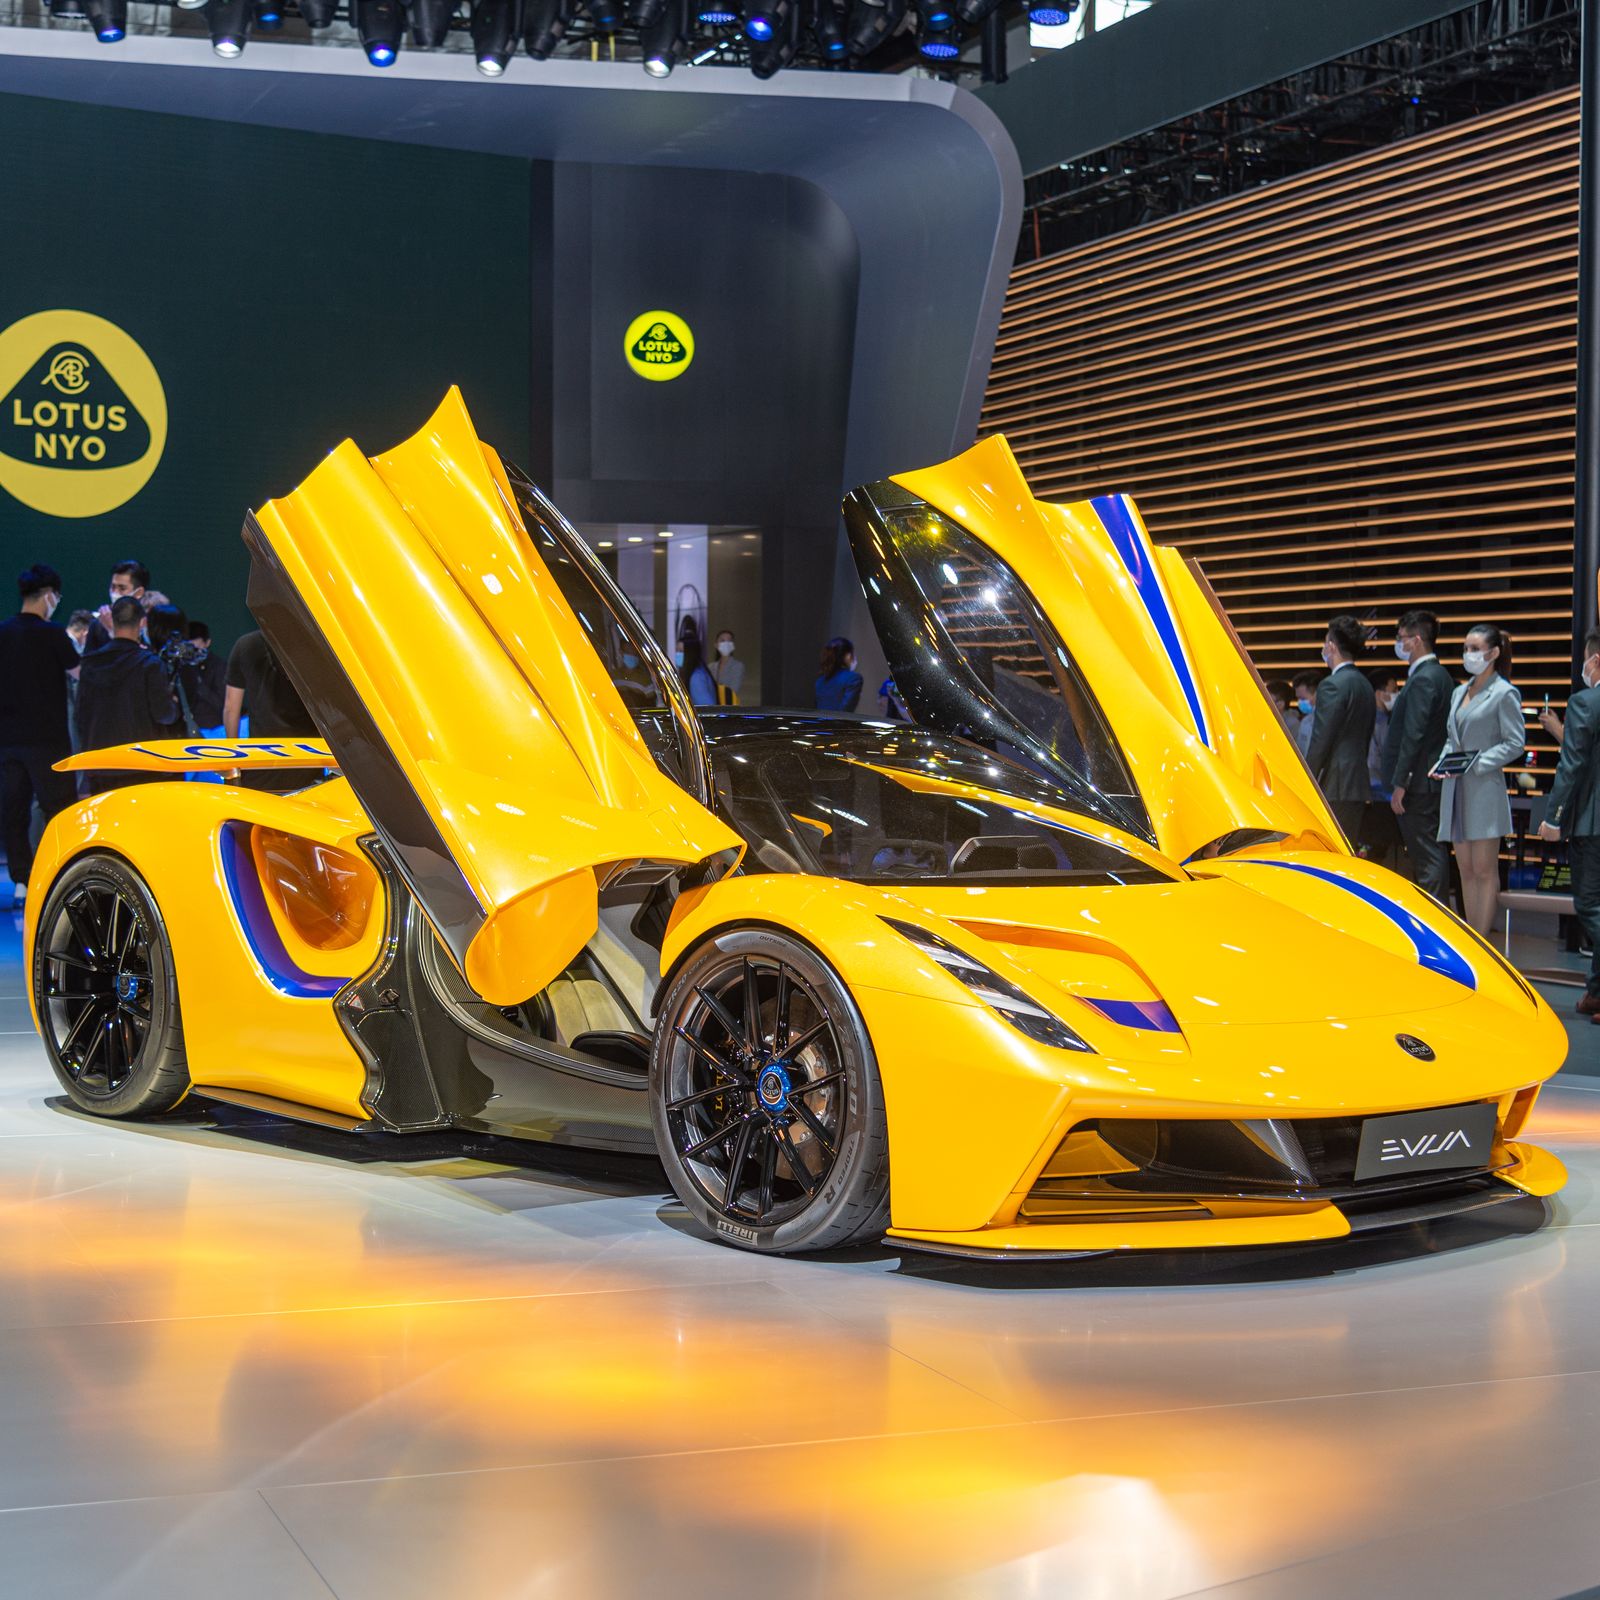 Luxury EV maker Lotus to go public through SPAC merger with L Catterton Asia